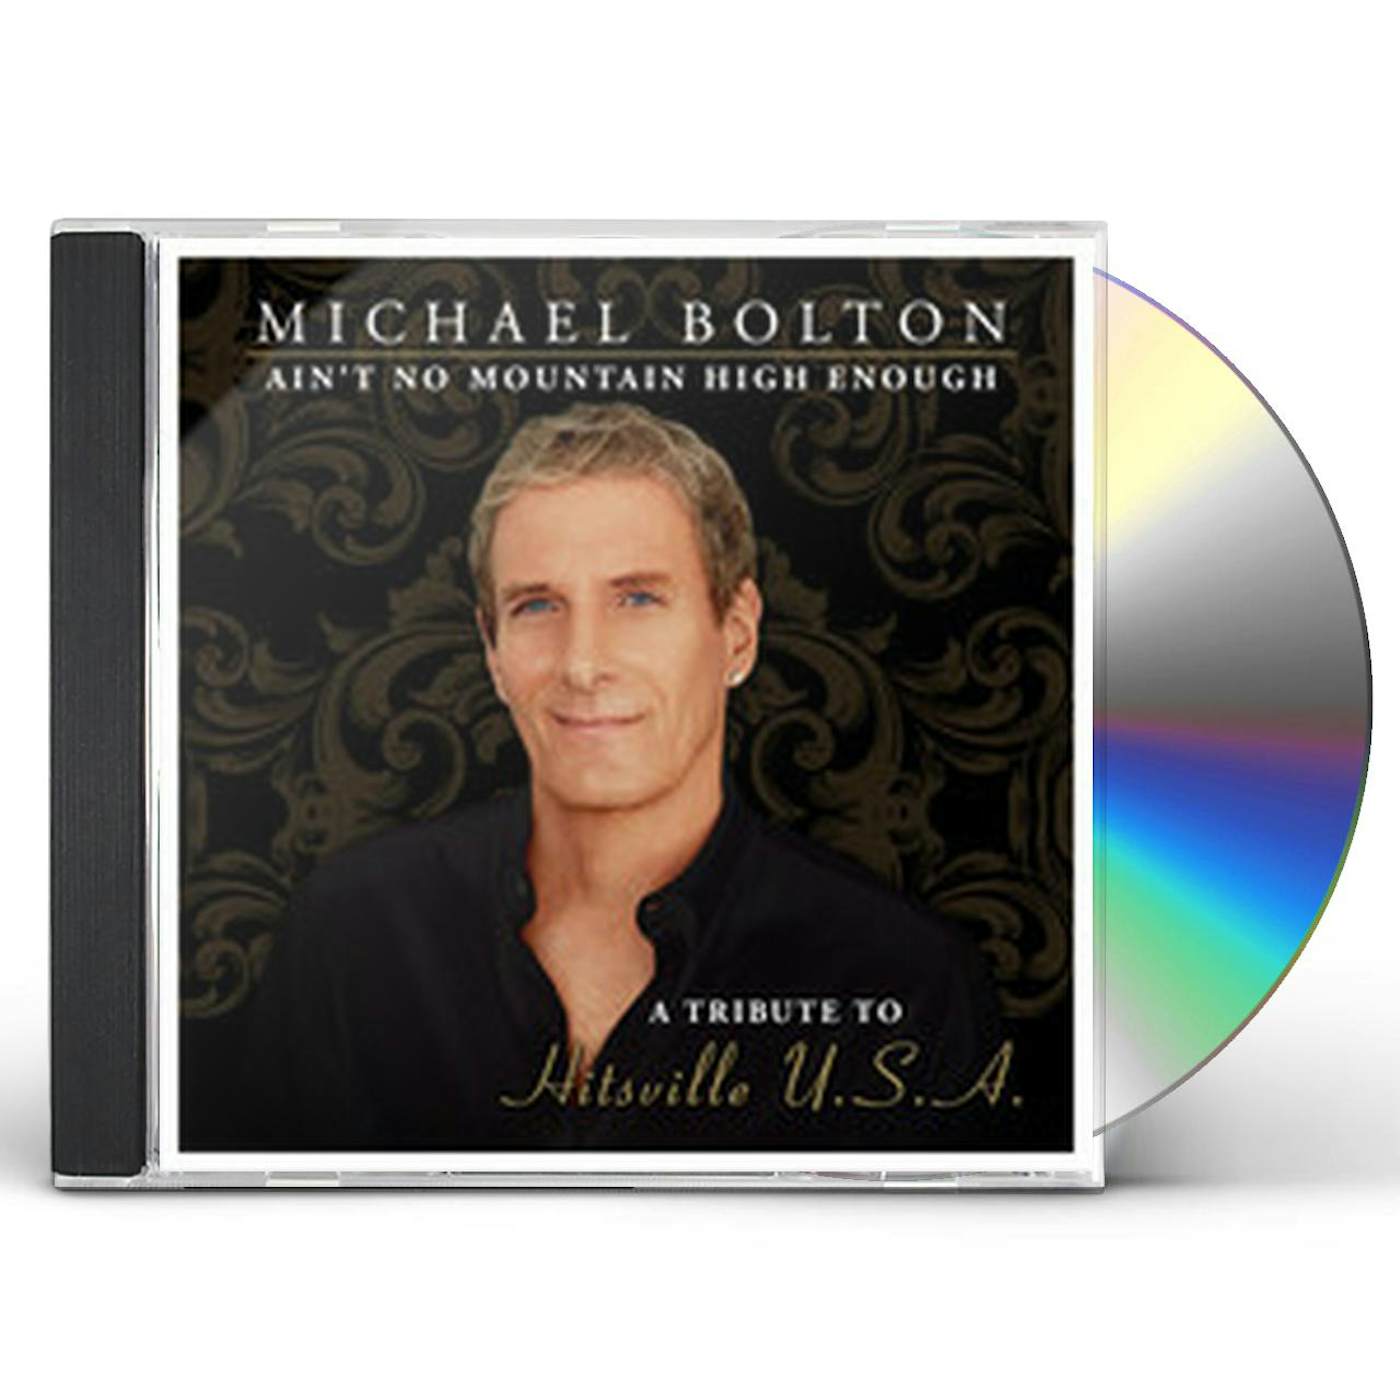 Michael Bolton AIN'T NO MOUNTAIN HIGH ENOUGH CD